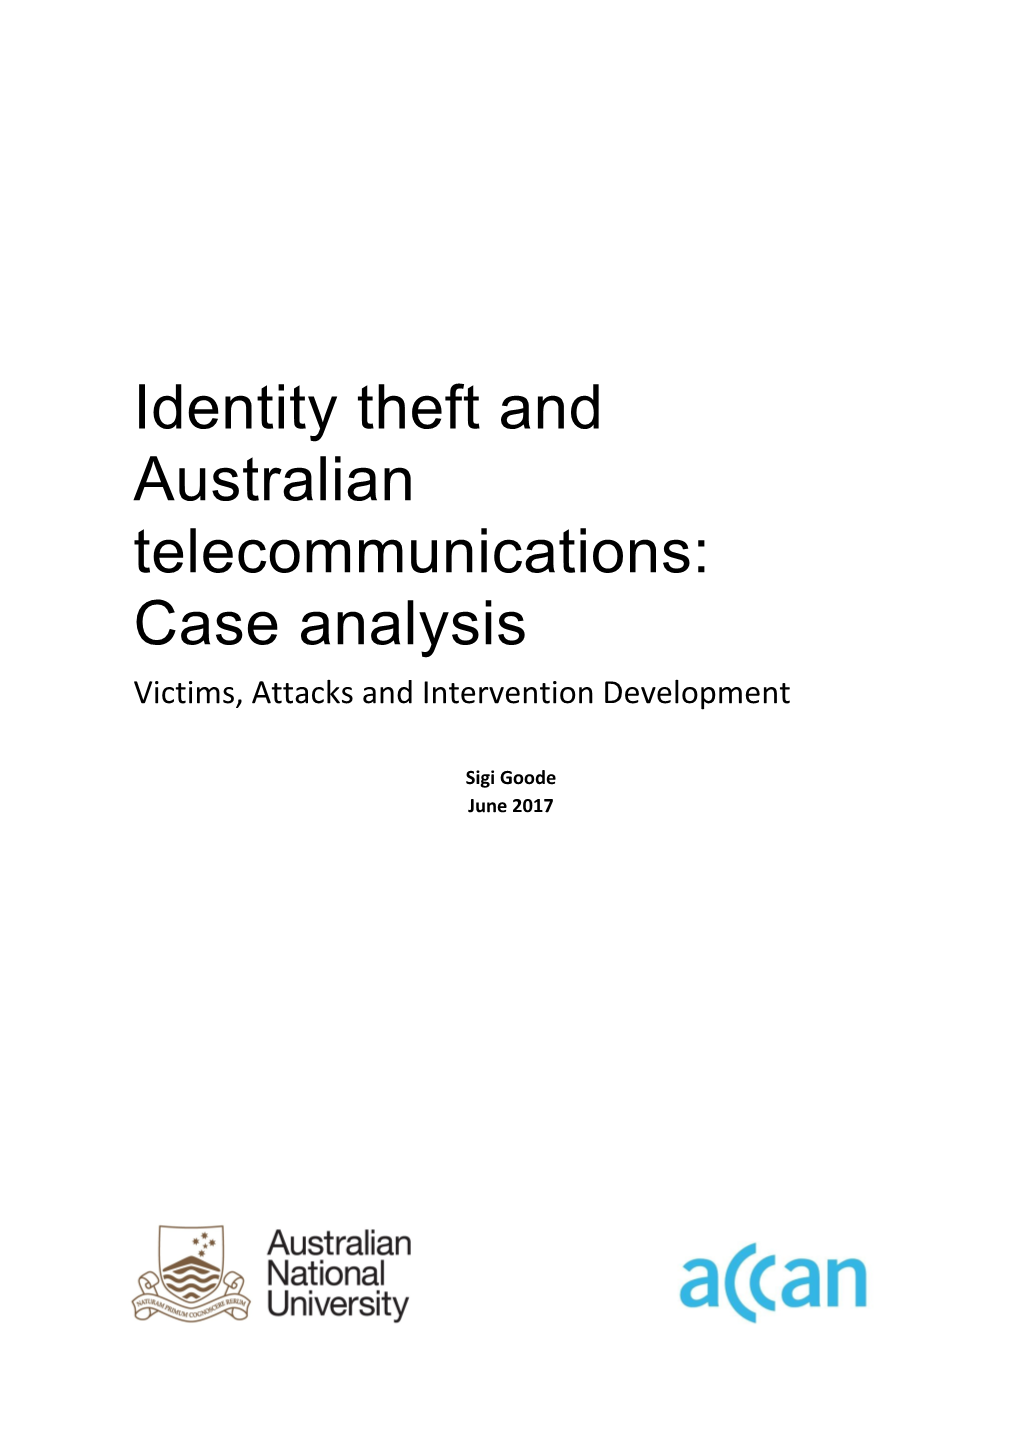 Identity Theft and Australian Telecommunications: Case Analysis